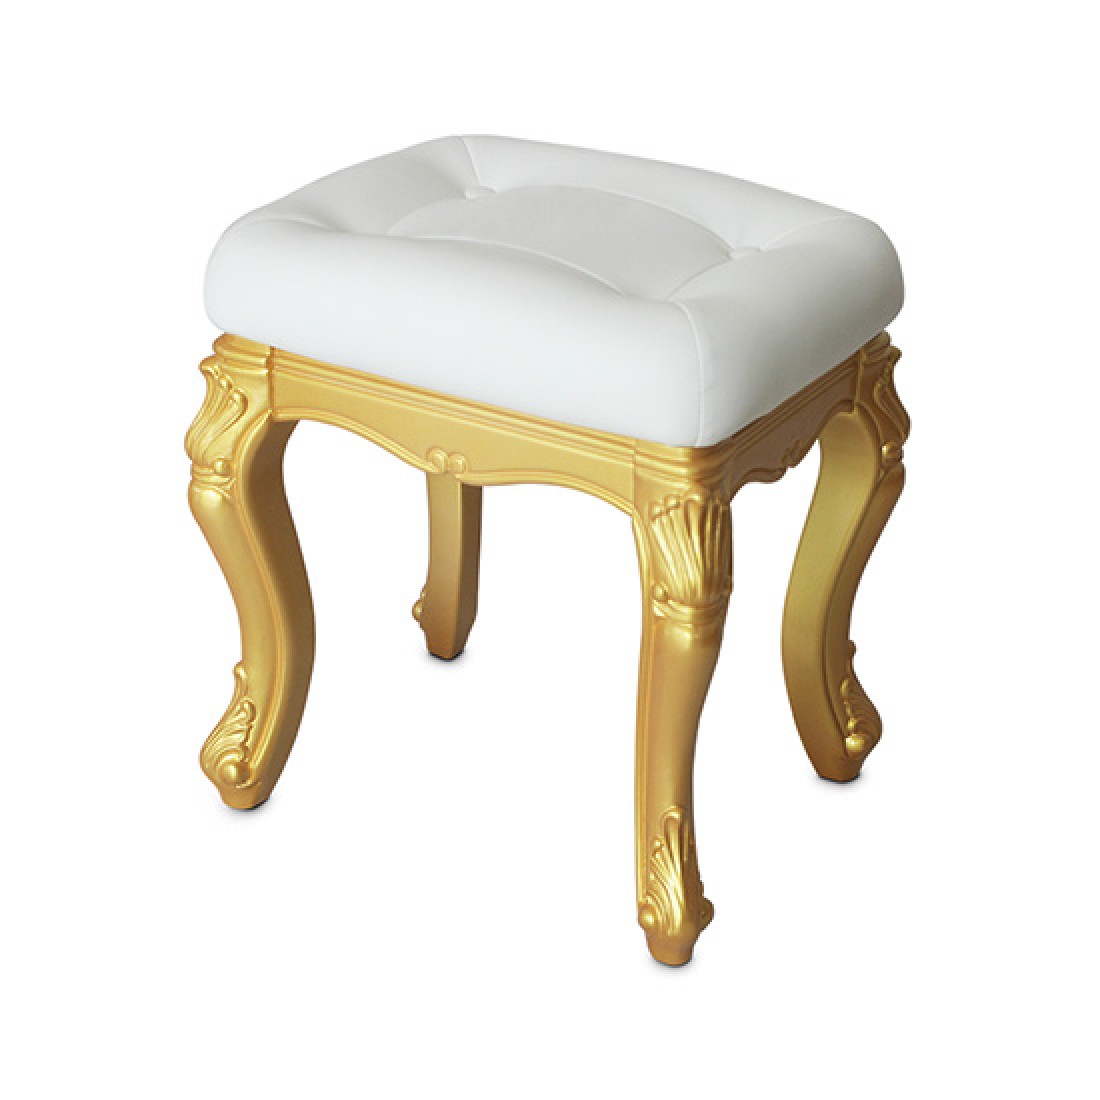 Professional pedicure stool Premium Collection White & Gold - 6950115 PEDICURE STOOLS